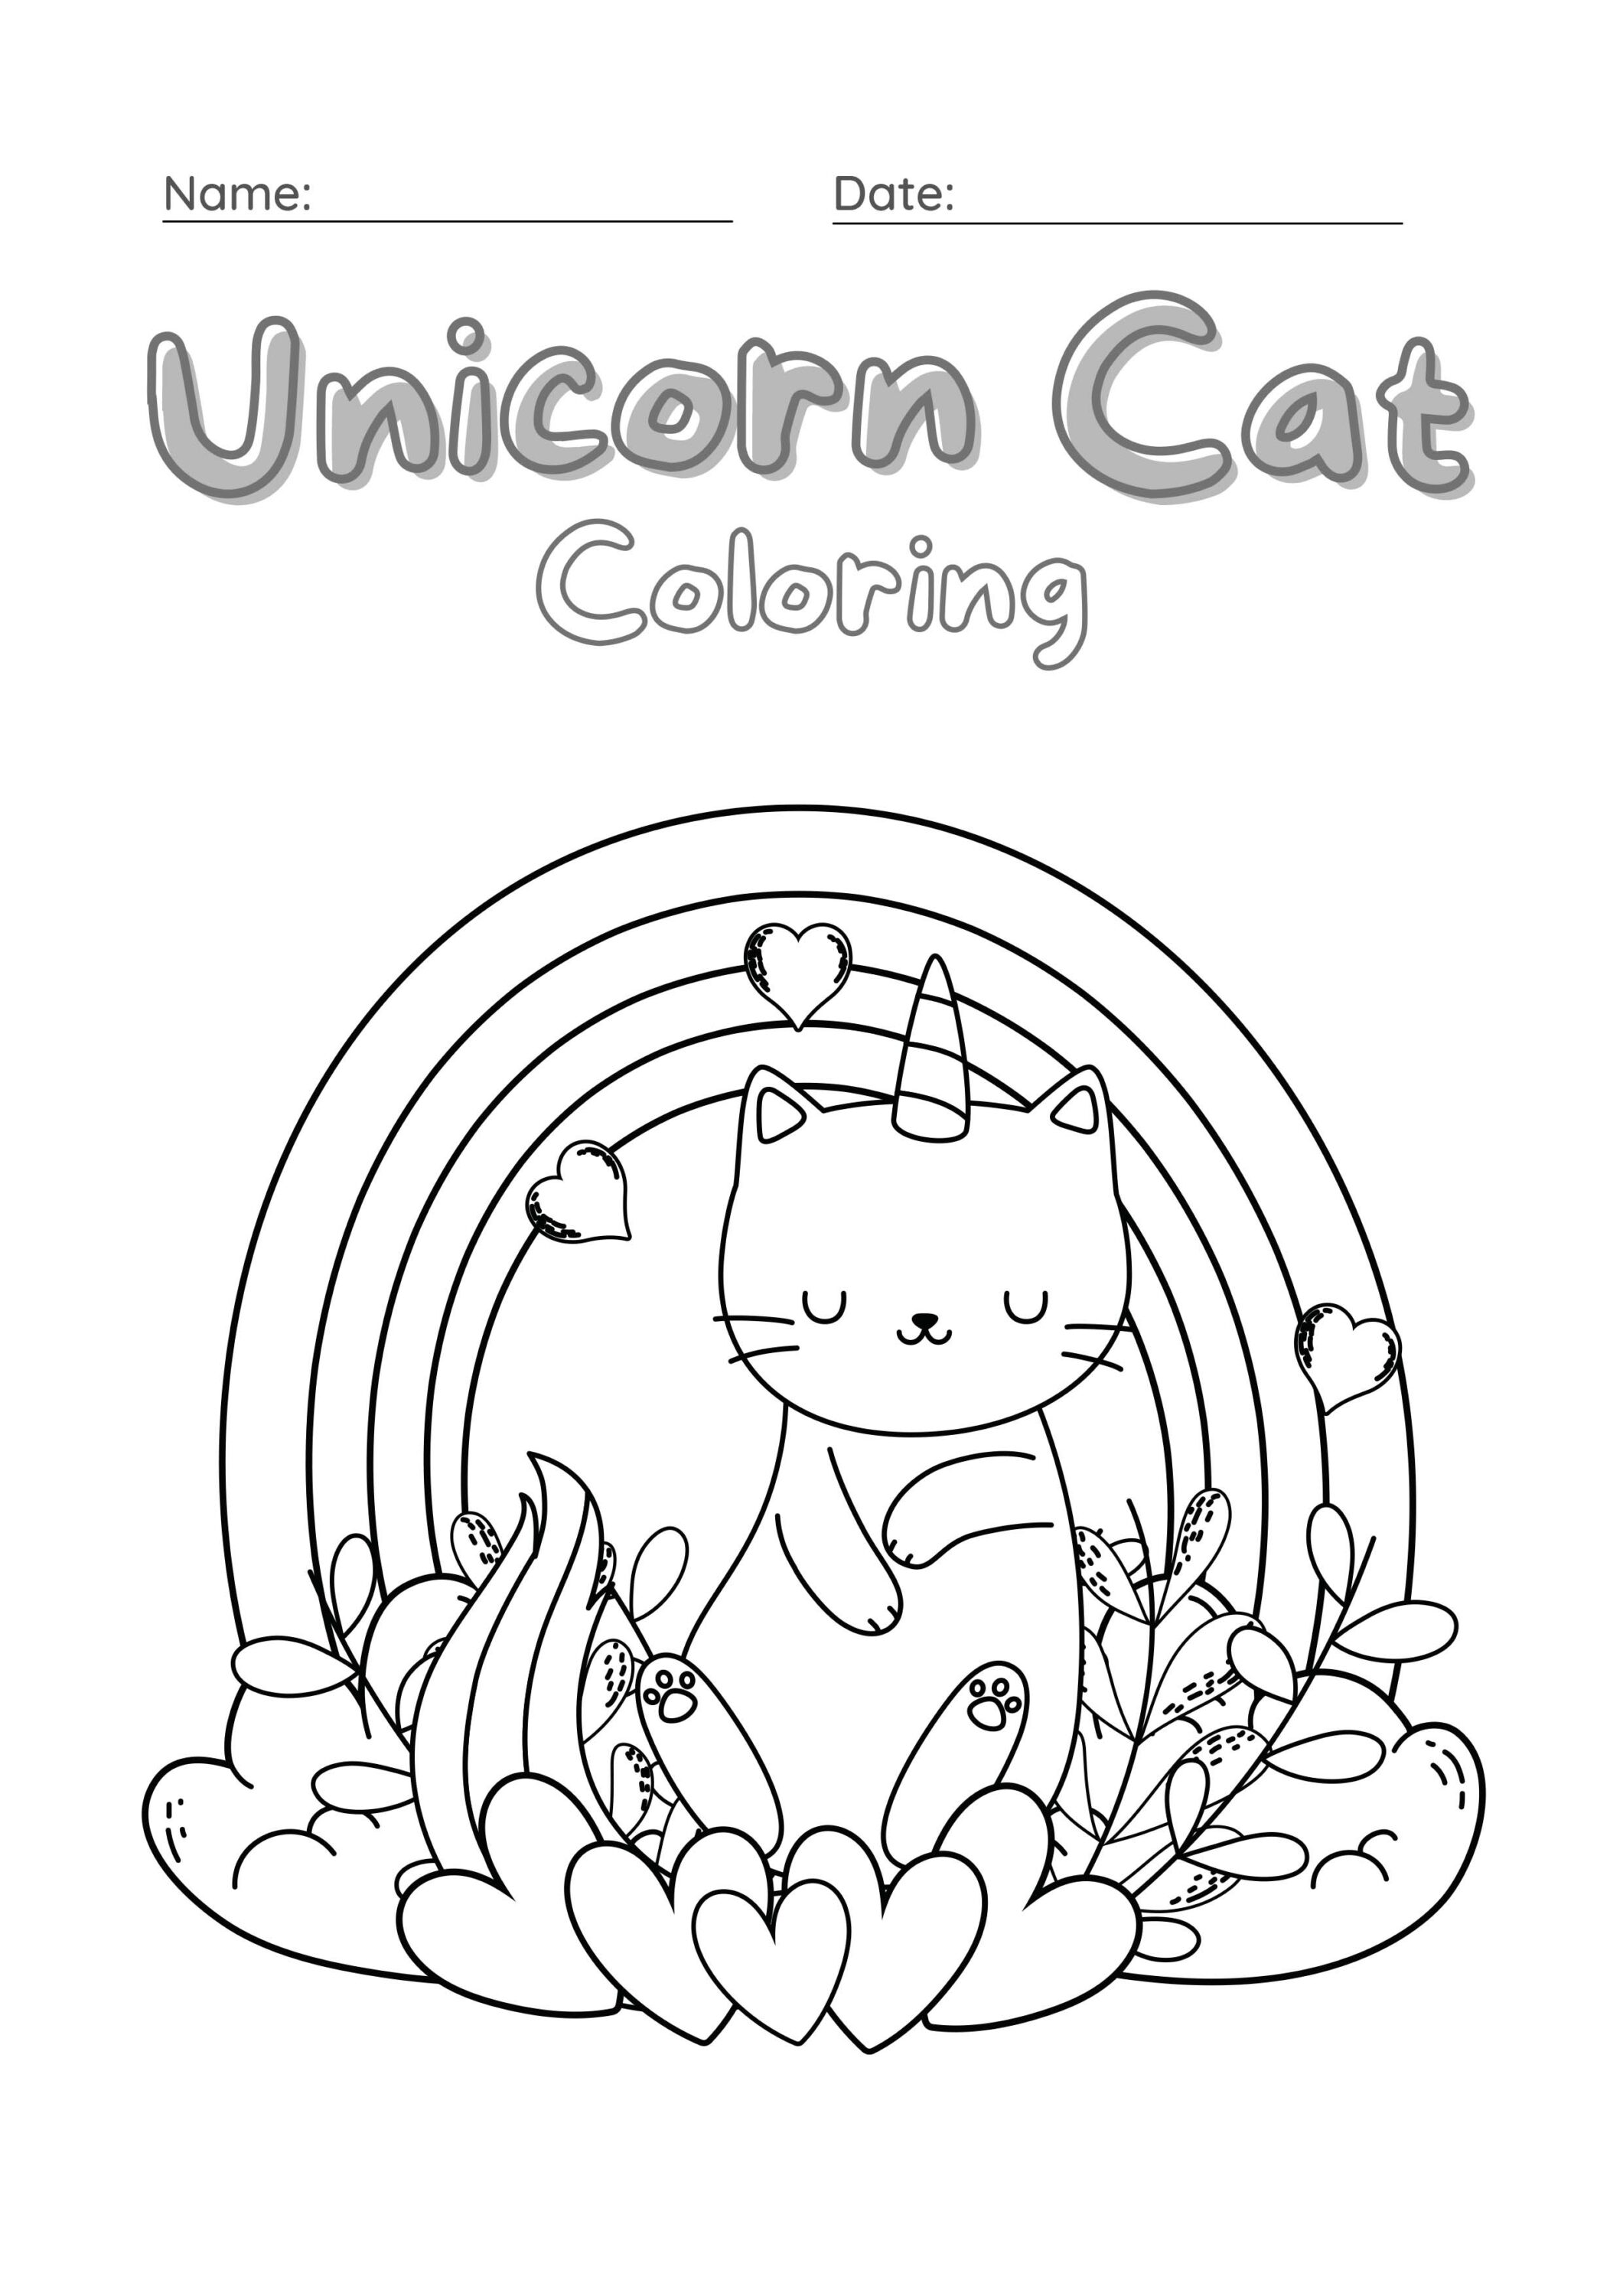 Unicorn Cat Coloring Worksheet Set 14